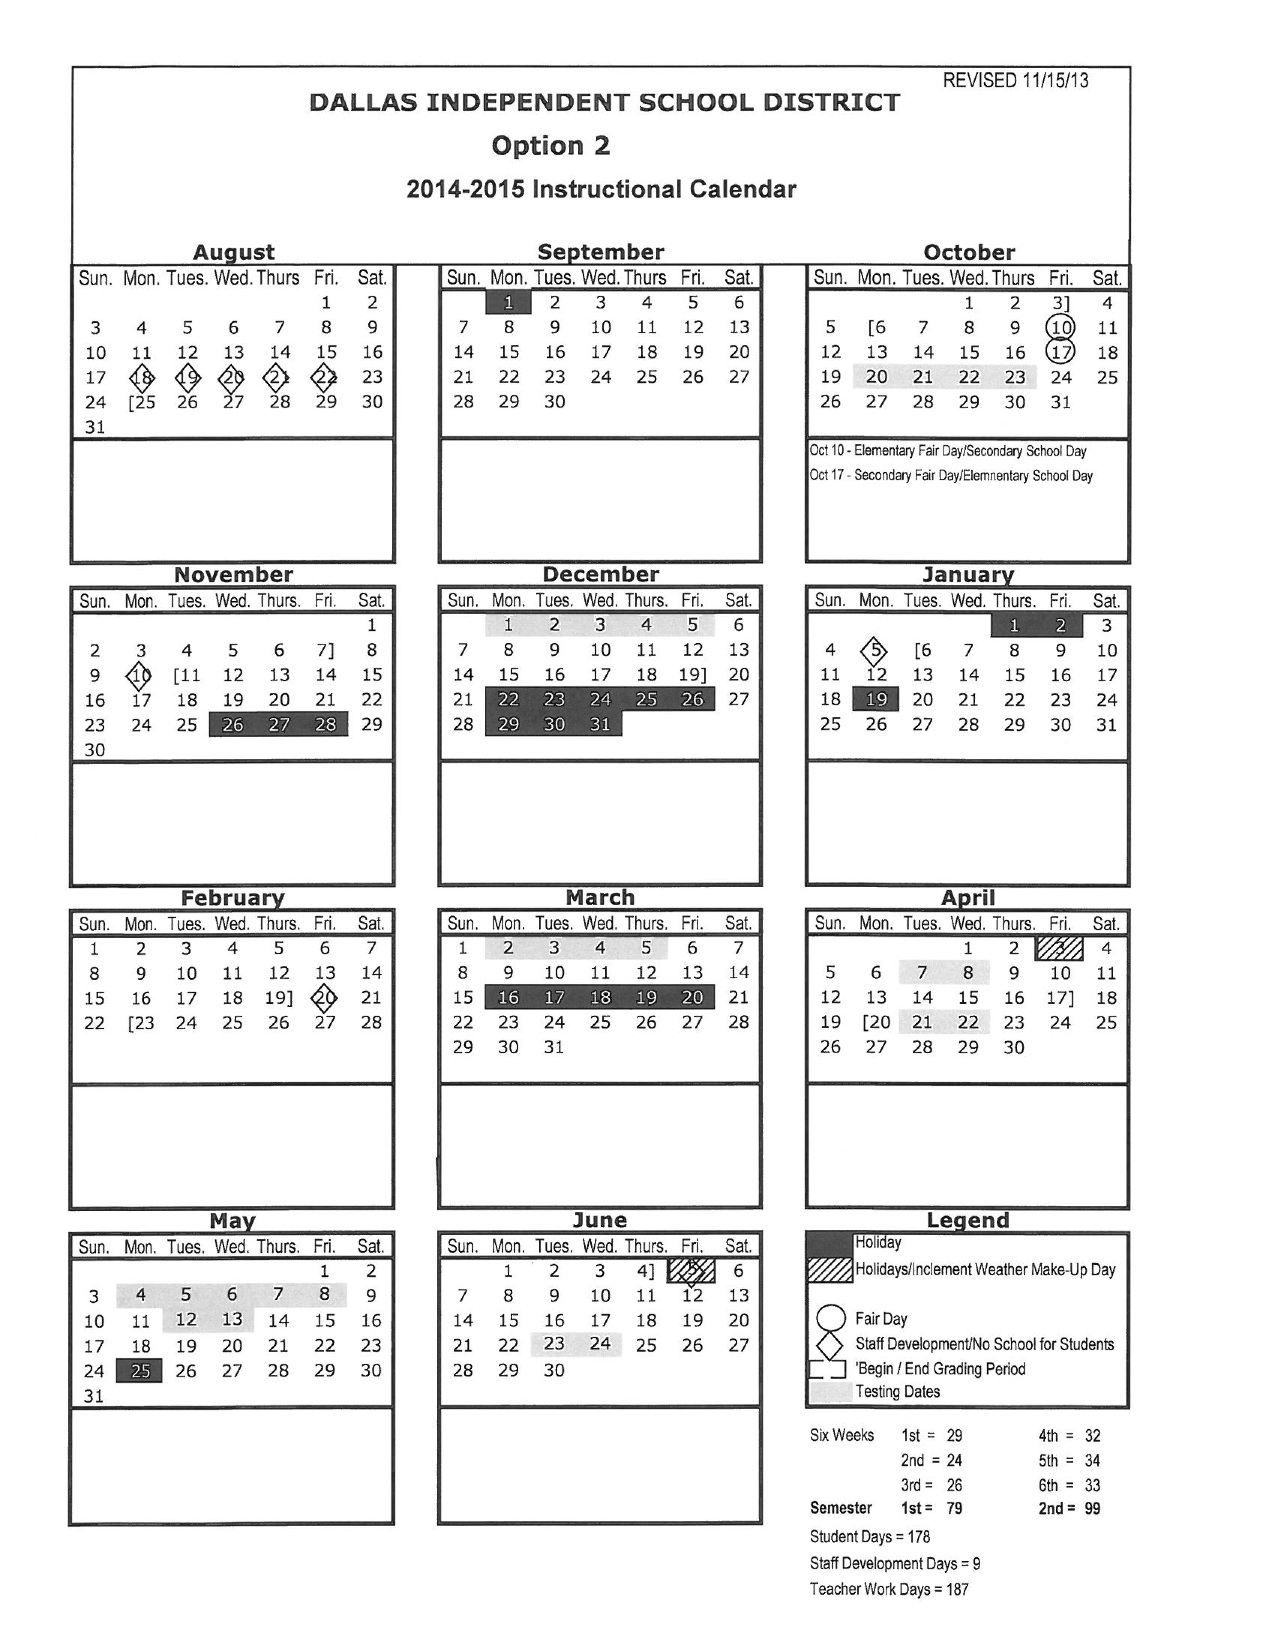 DISD approves 20142015 schedule Oak Cliff